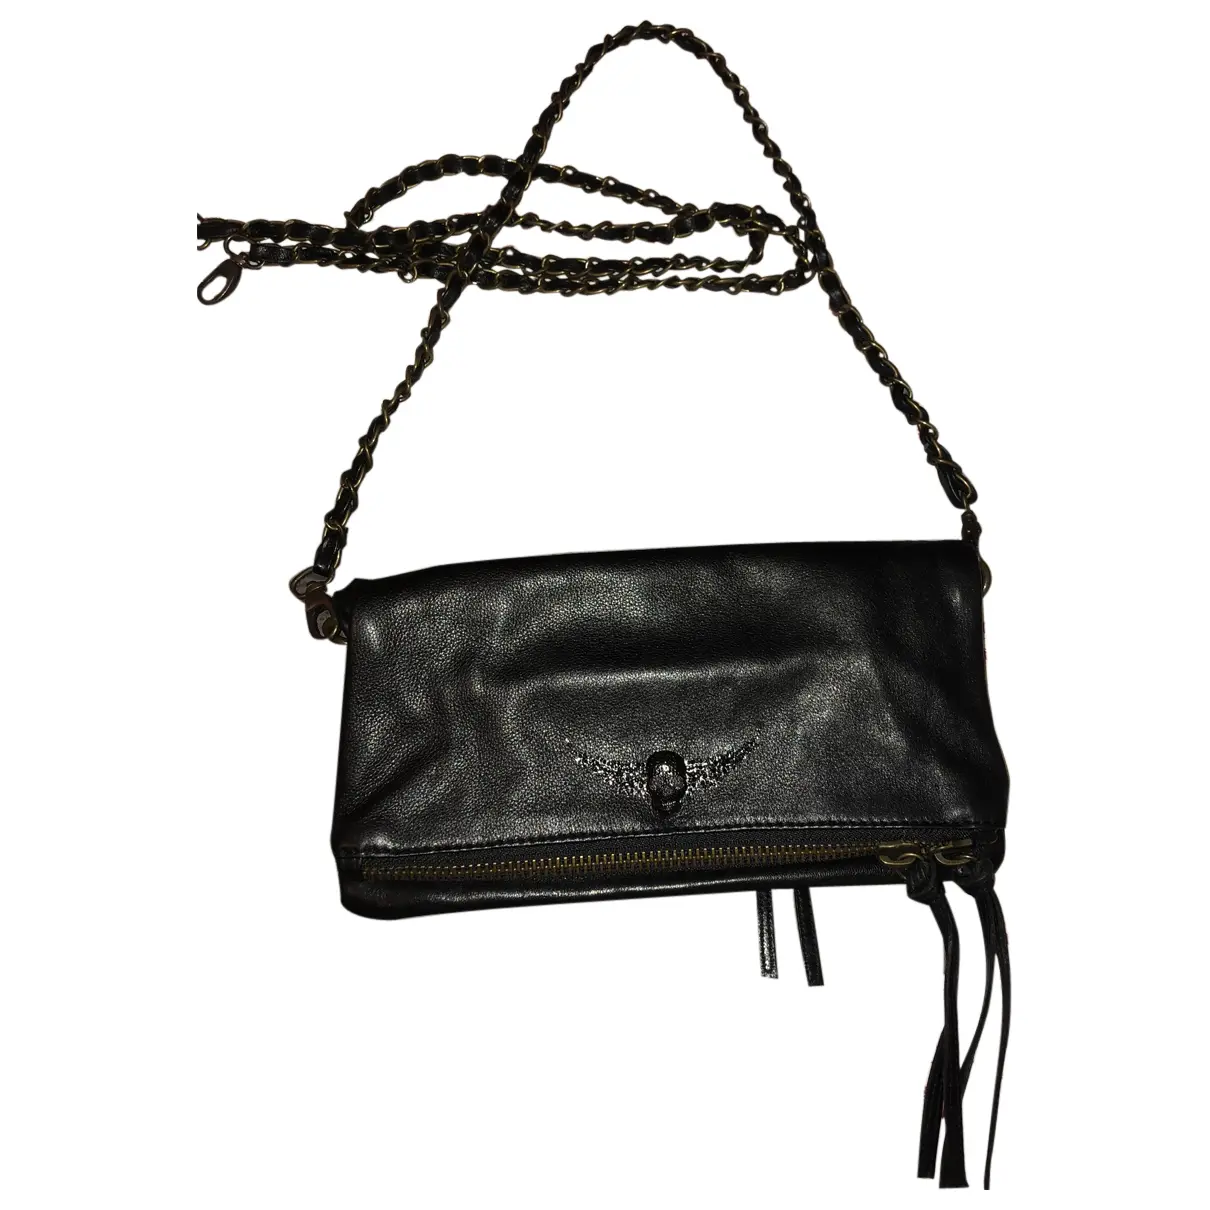 Rock leather clutch bag Zadig & Voltaire